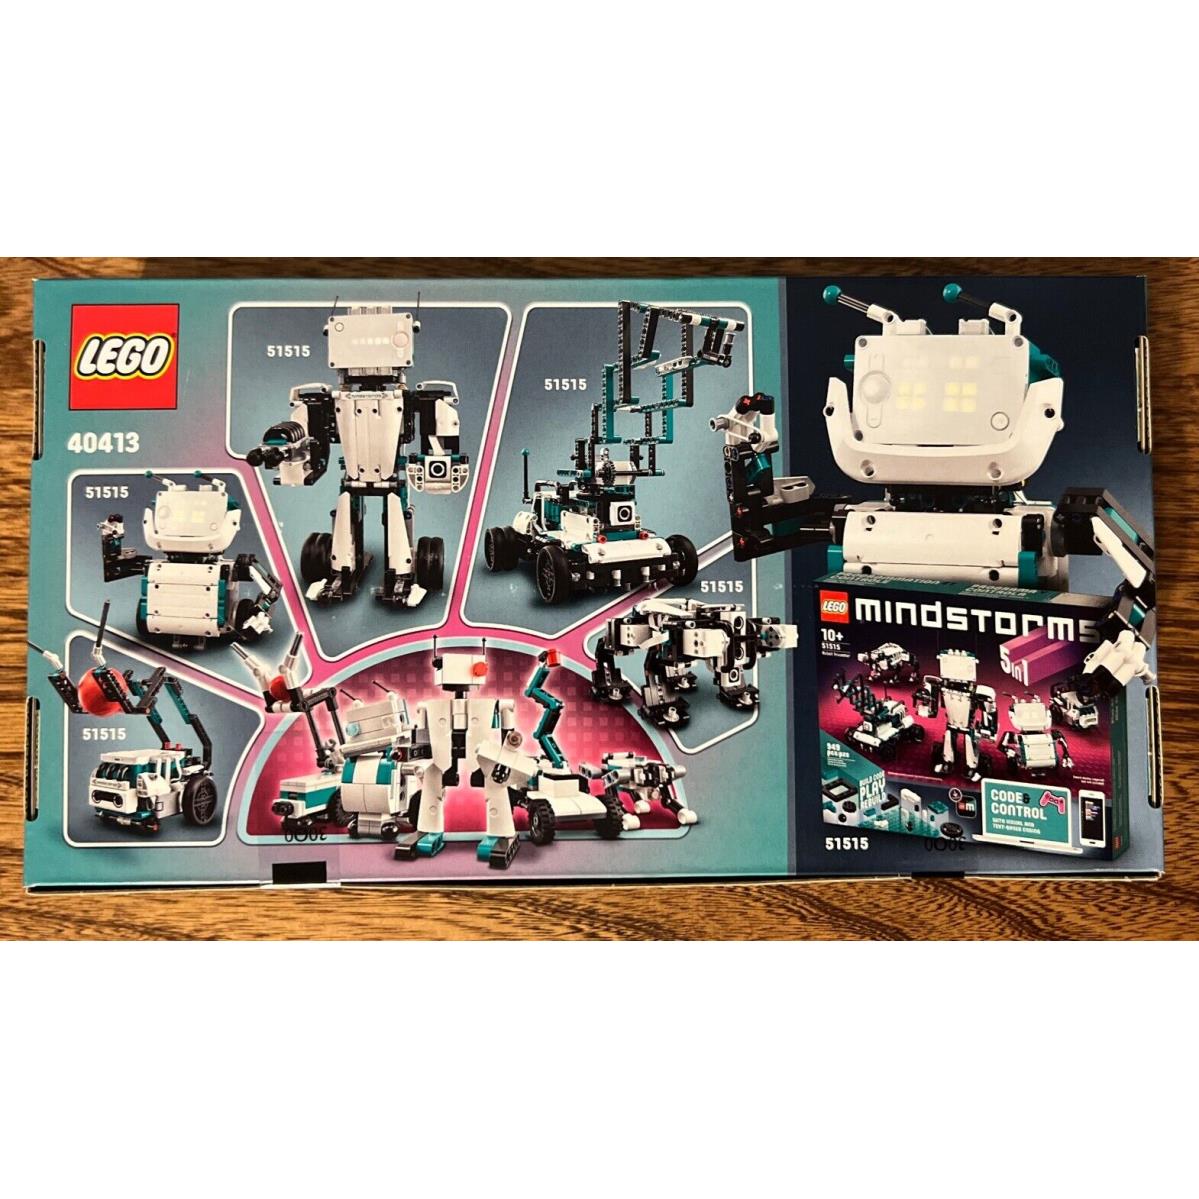 Lego 40413 Mindstorms Robots 366 Pieces Ltd Edition Retired